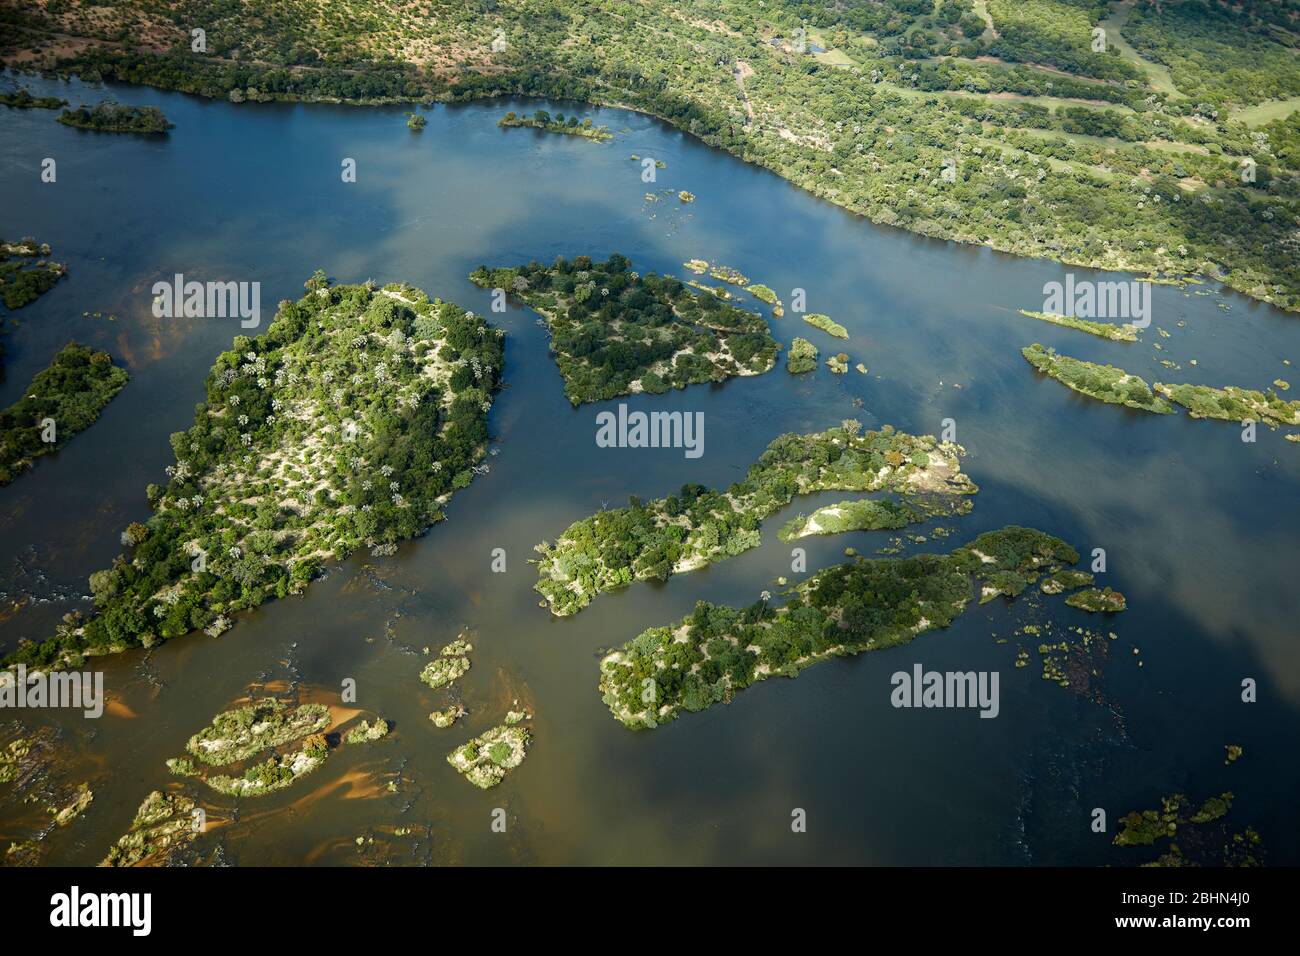 Islands in Zambezi River, just above Victoria Falls, Zimbabwe / Zambia border, Southern Africa - aerial Stock Photo